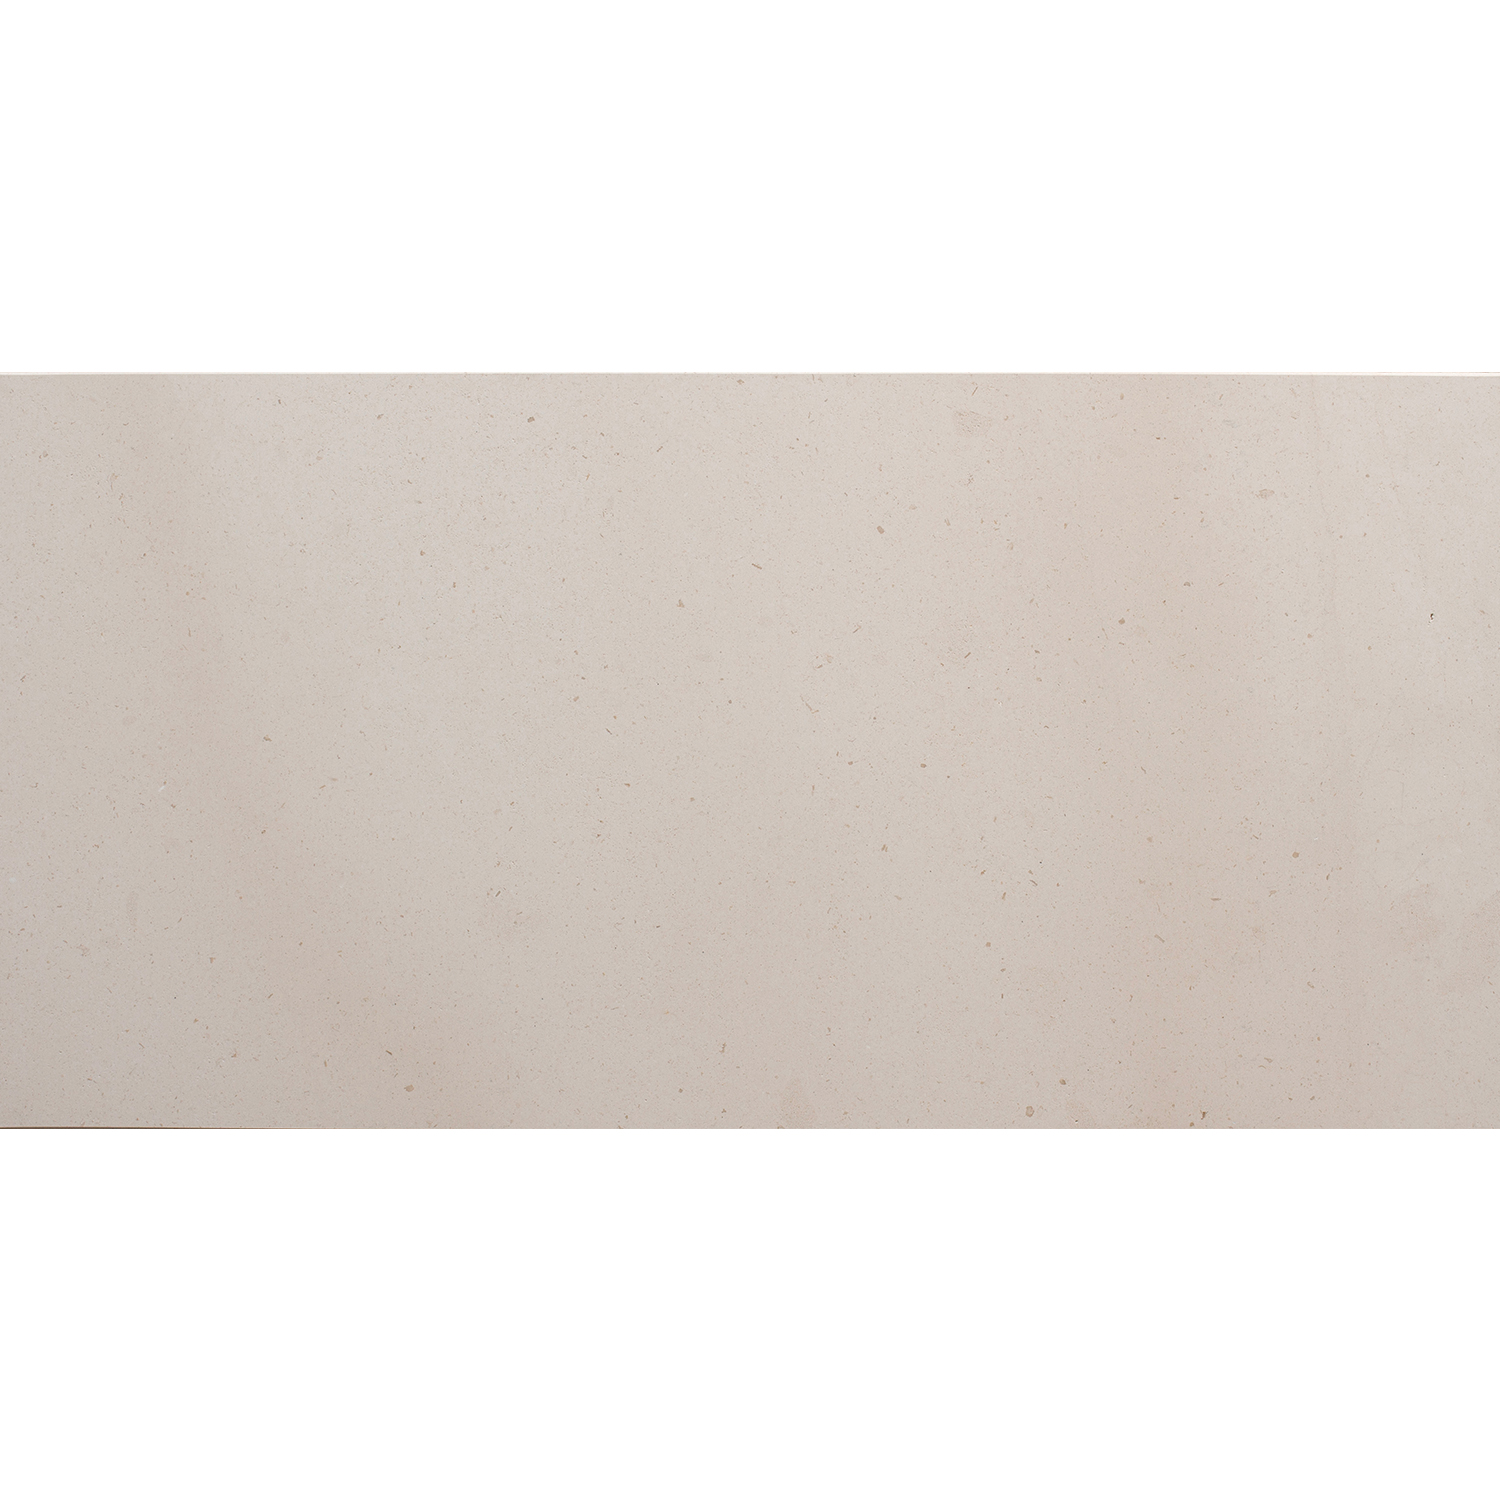 SAMPLE OF CHÂTEAU WHITE HONED LIMESTONE TILE 10 X 10 cm 